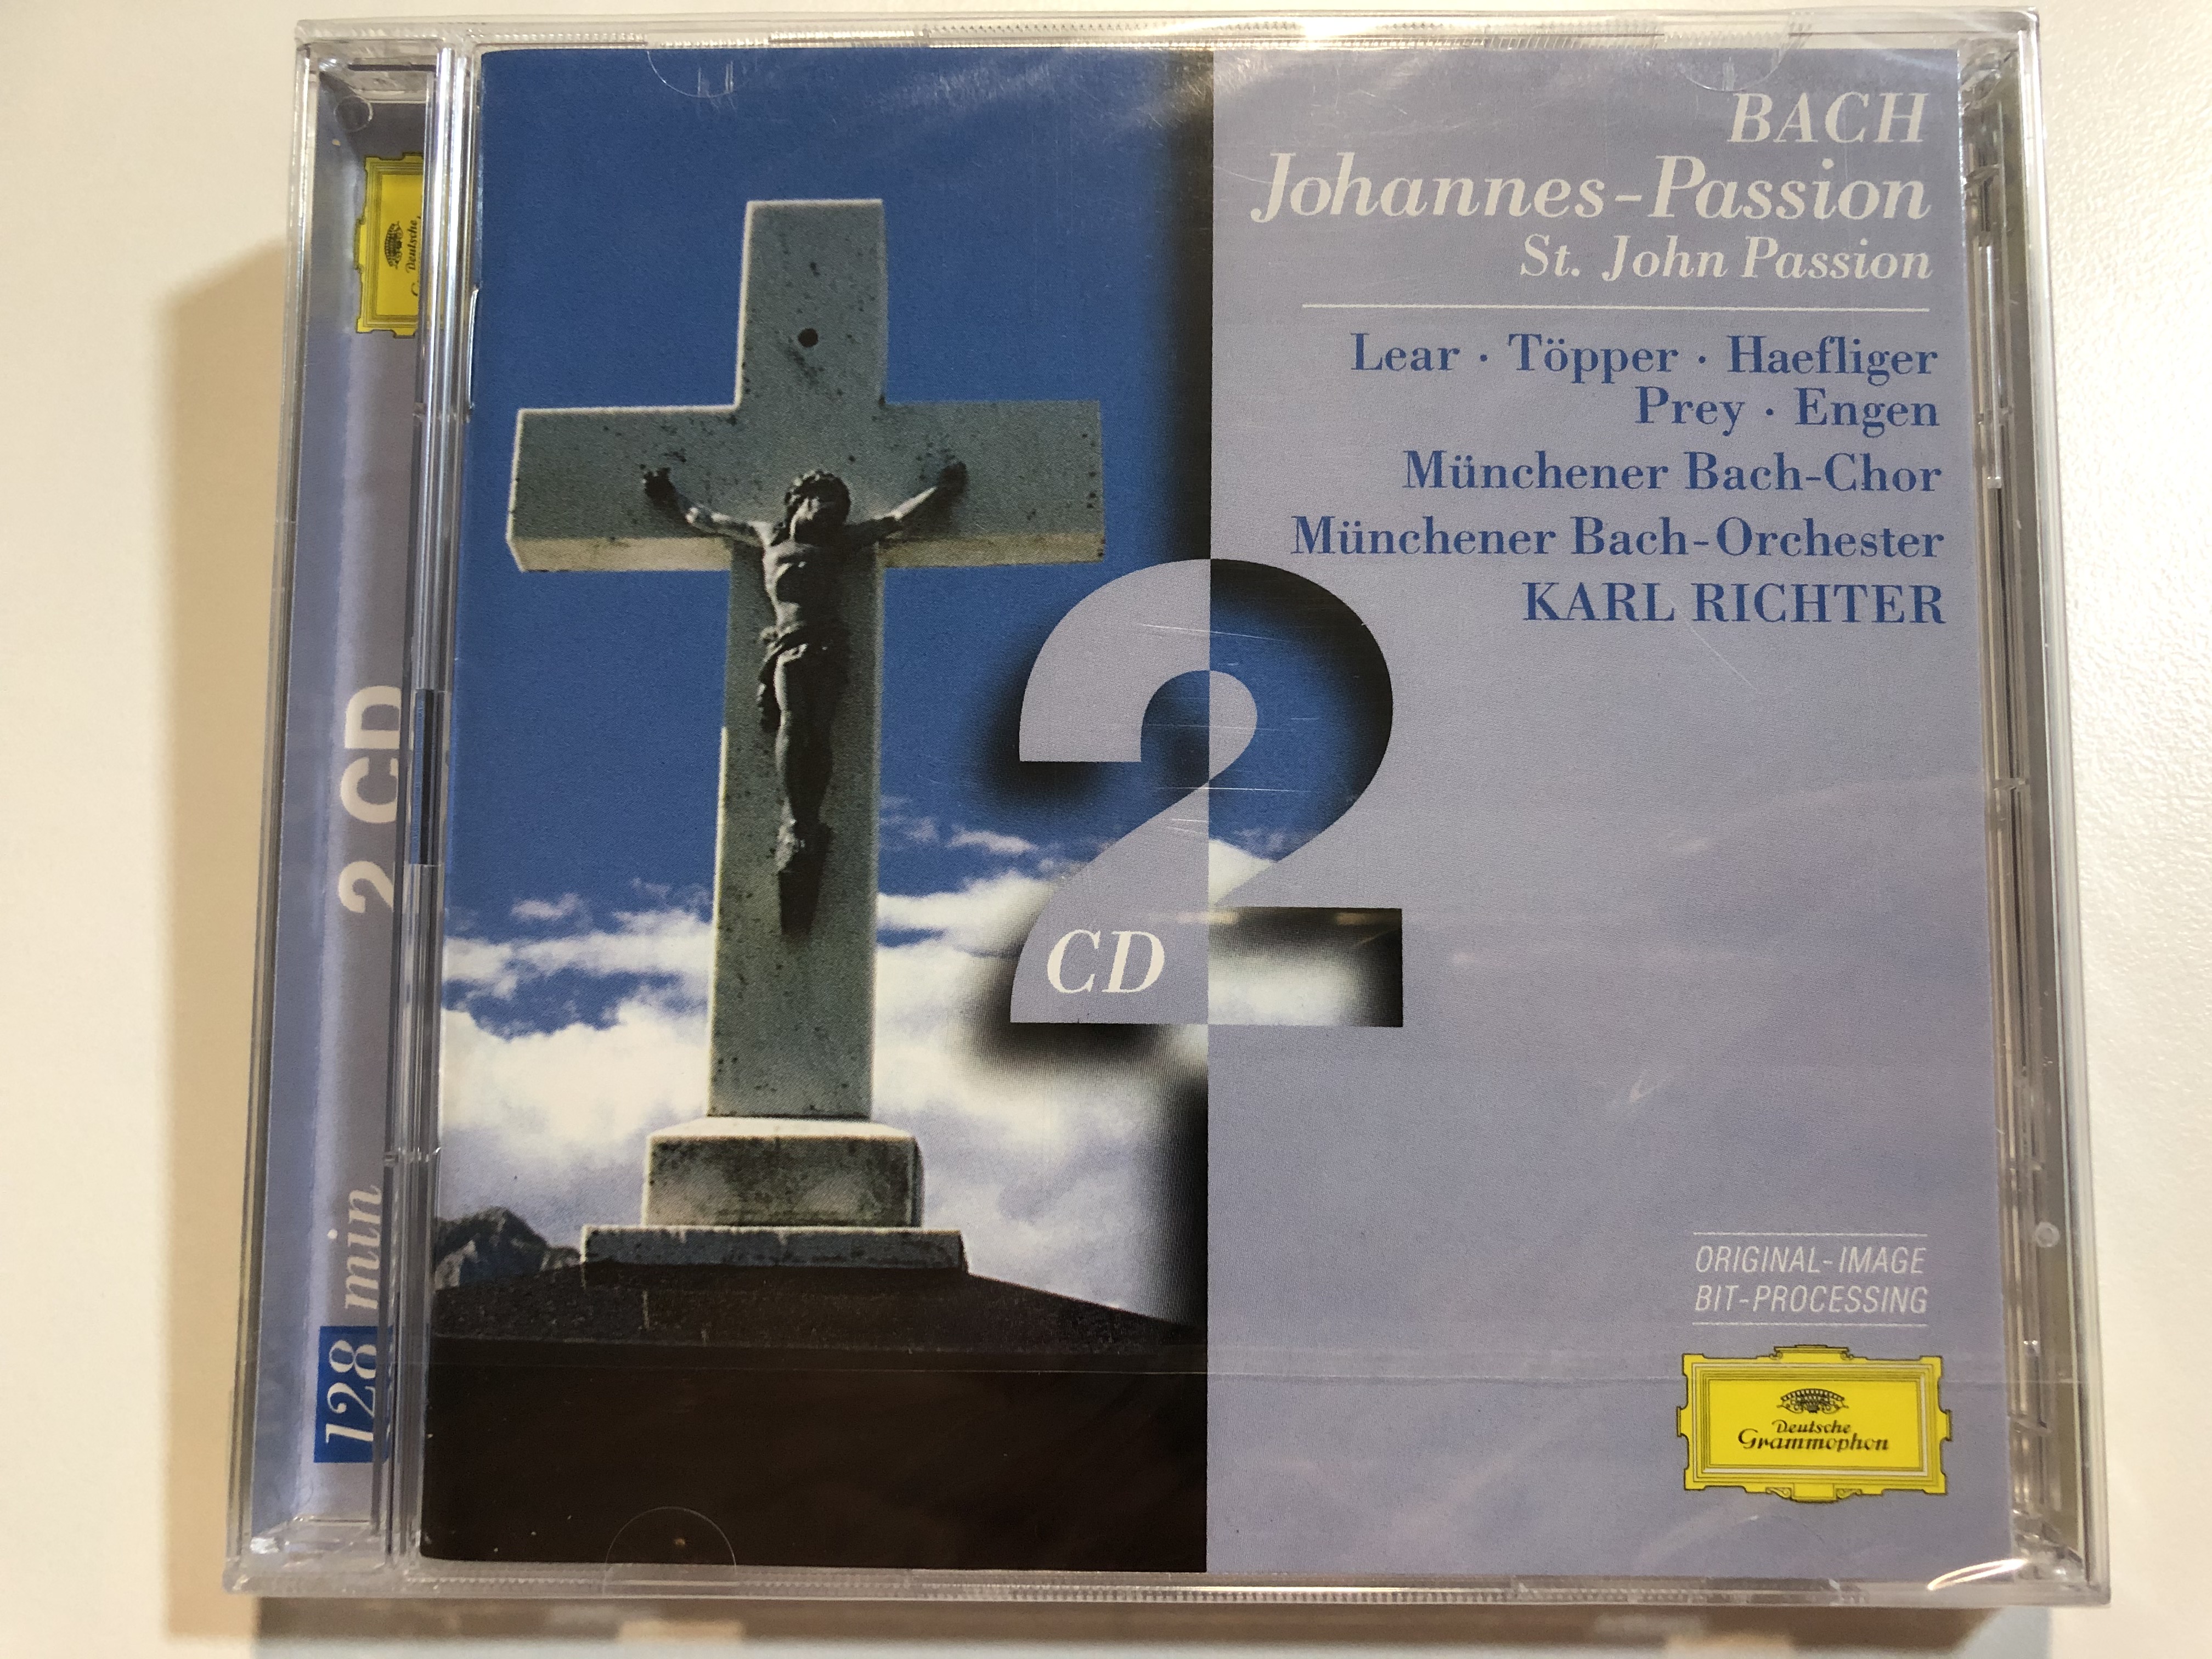 bach-johannes-passion-st.-john-passion-lear-t-pper-haefliger-prey-engen-m-nchener-bach-chor-m-nchener-bach-orchester-karl-richter-deutsche-grammophon-2x-audio-cd-453-007-2-1-.jpg